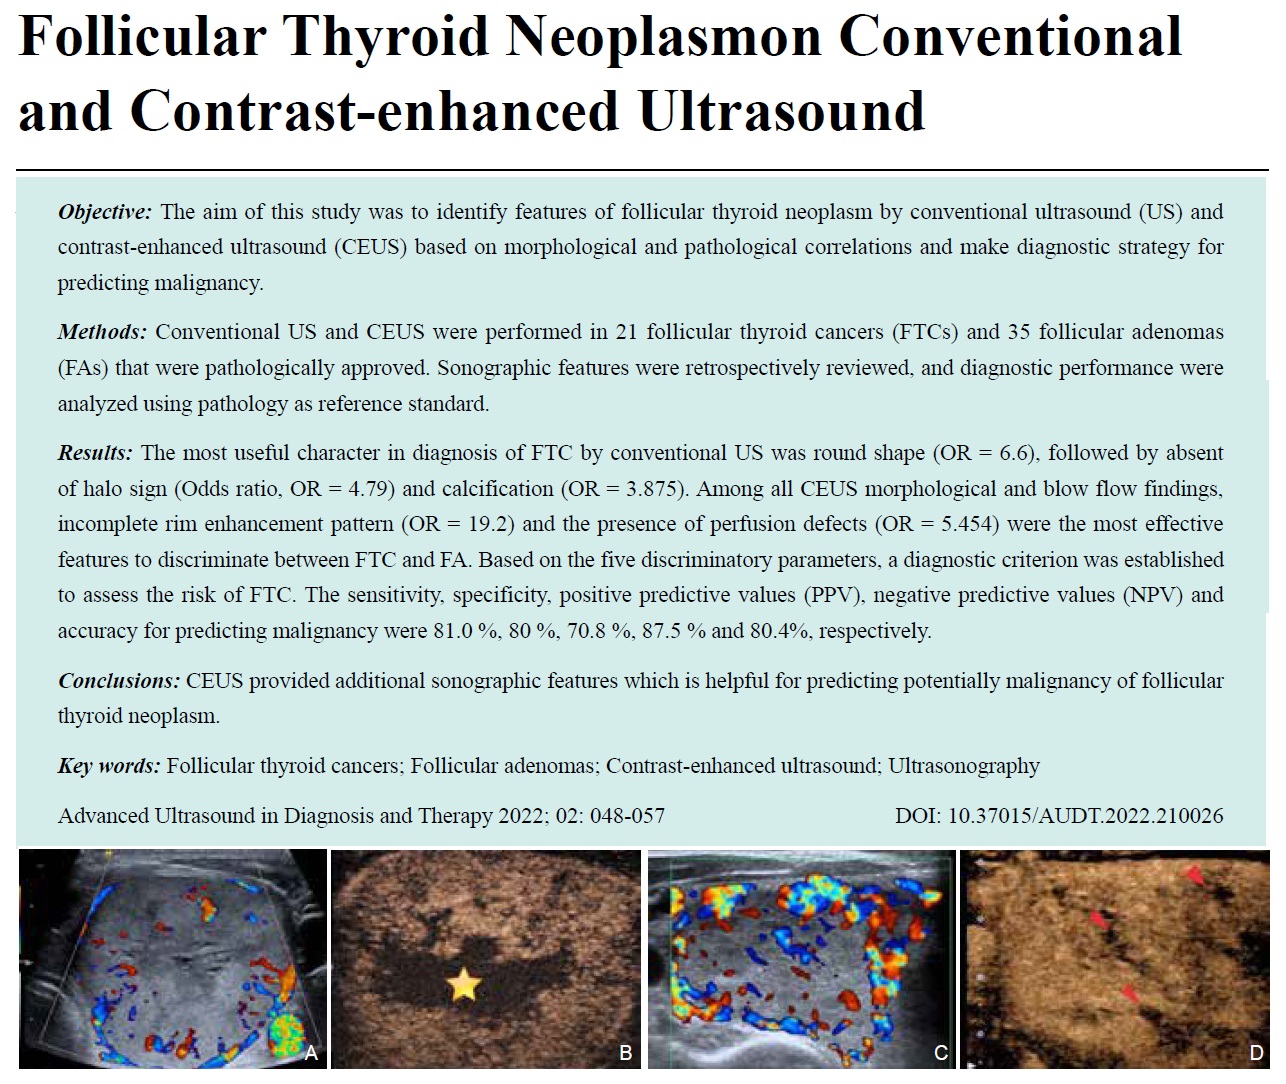 Follicular Thyroid Neoplasmon Conventional and Contrast-enhanced Ultrasound